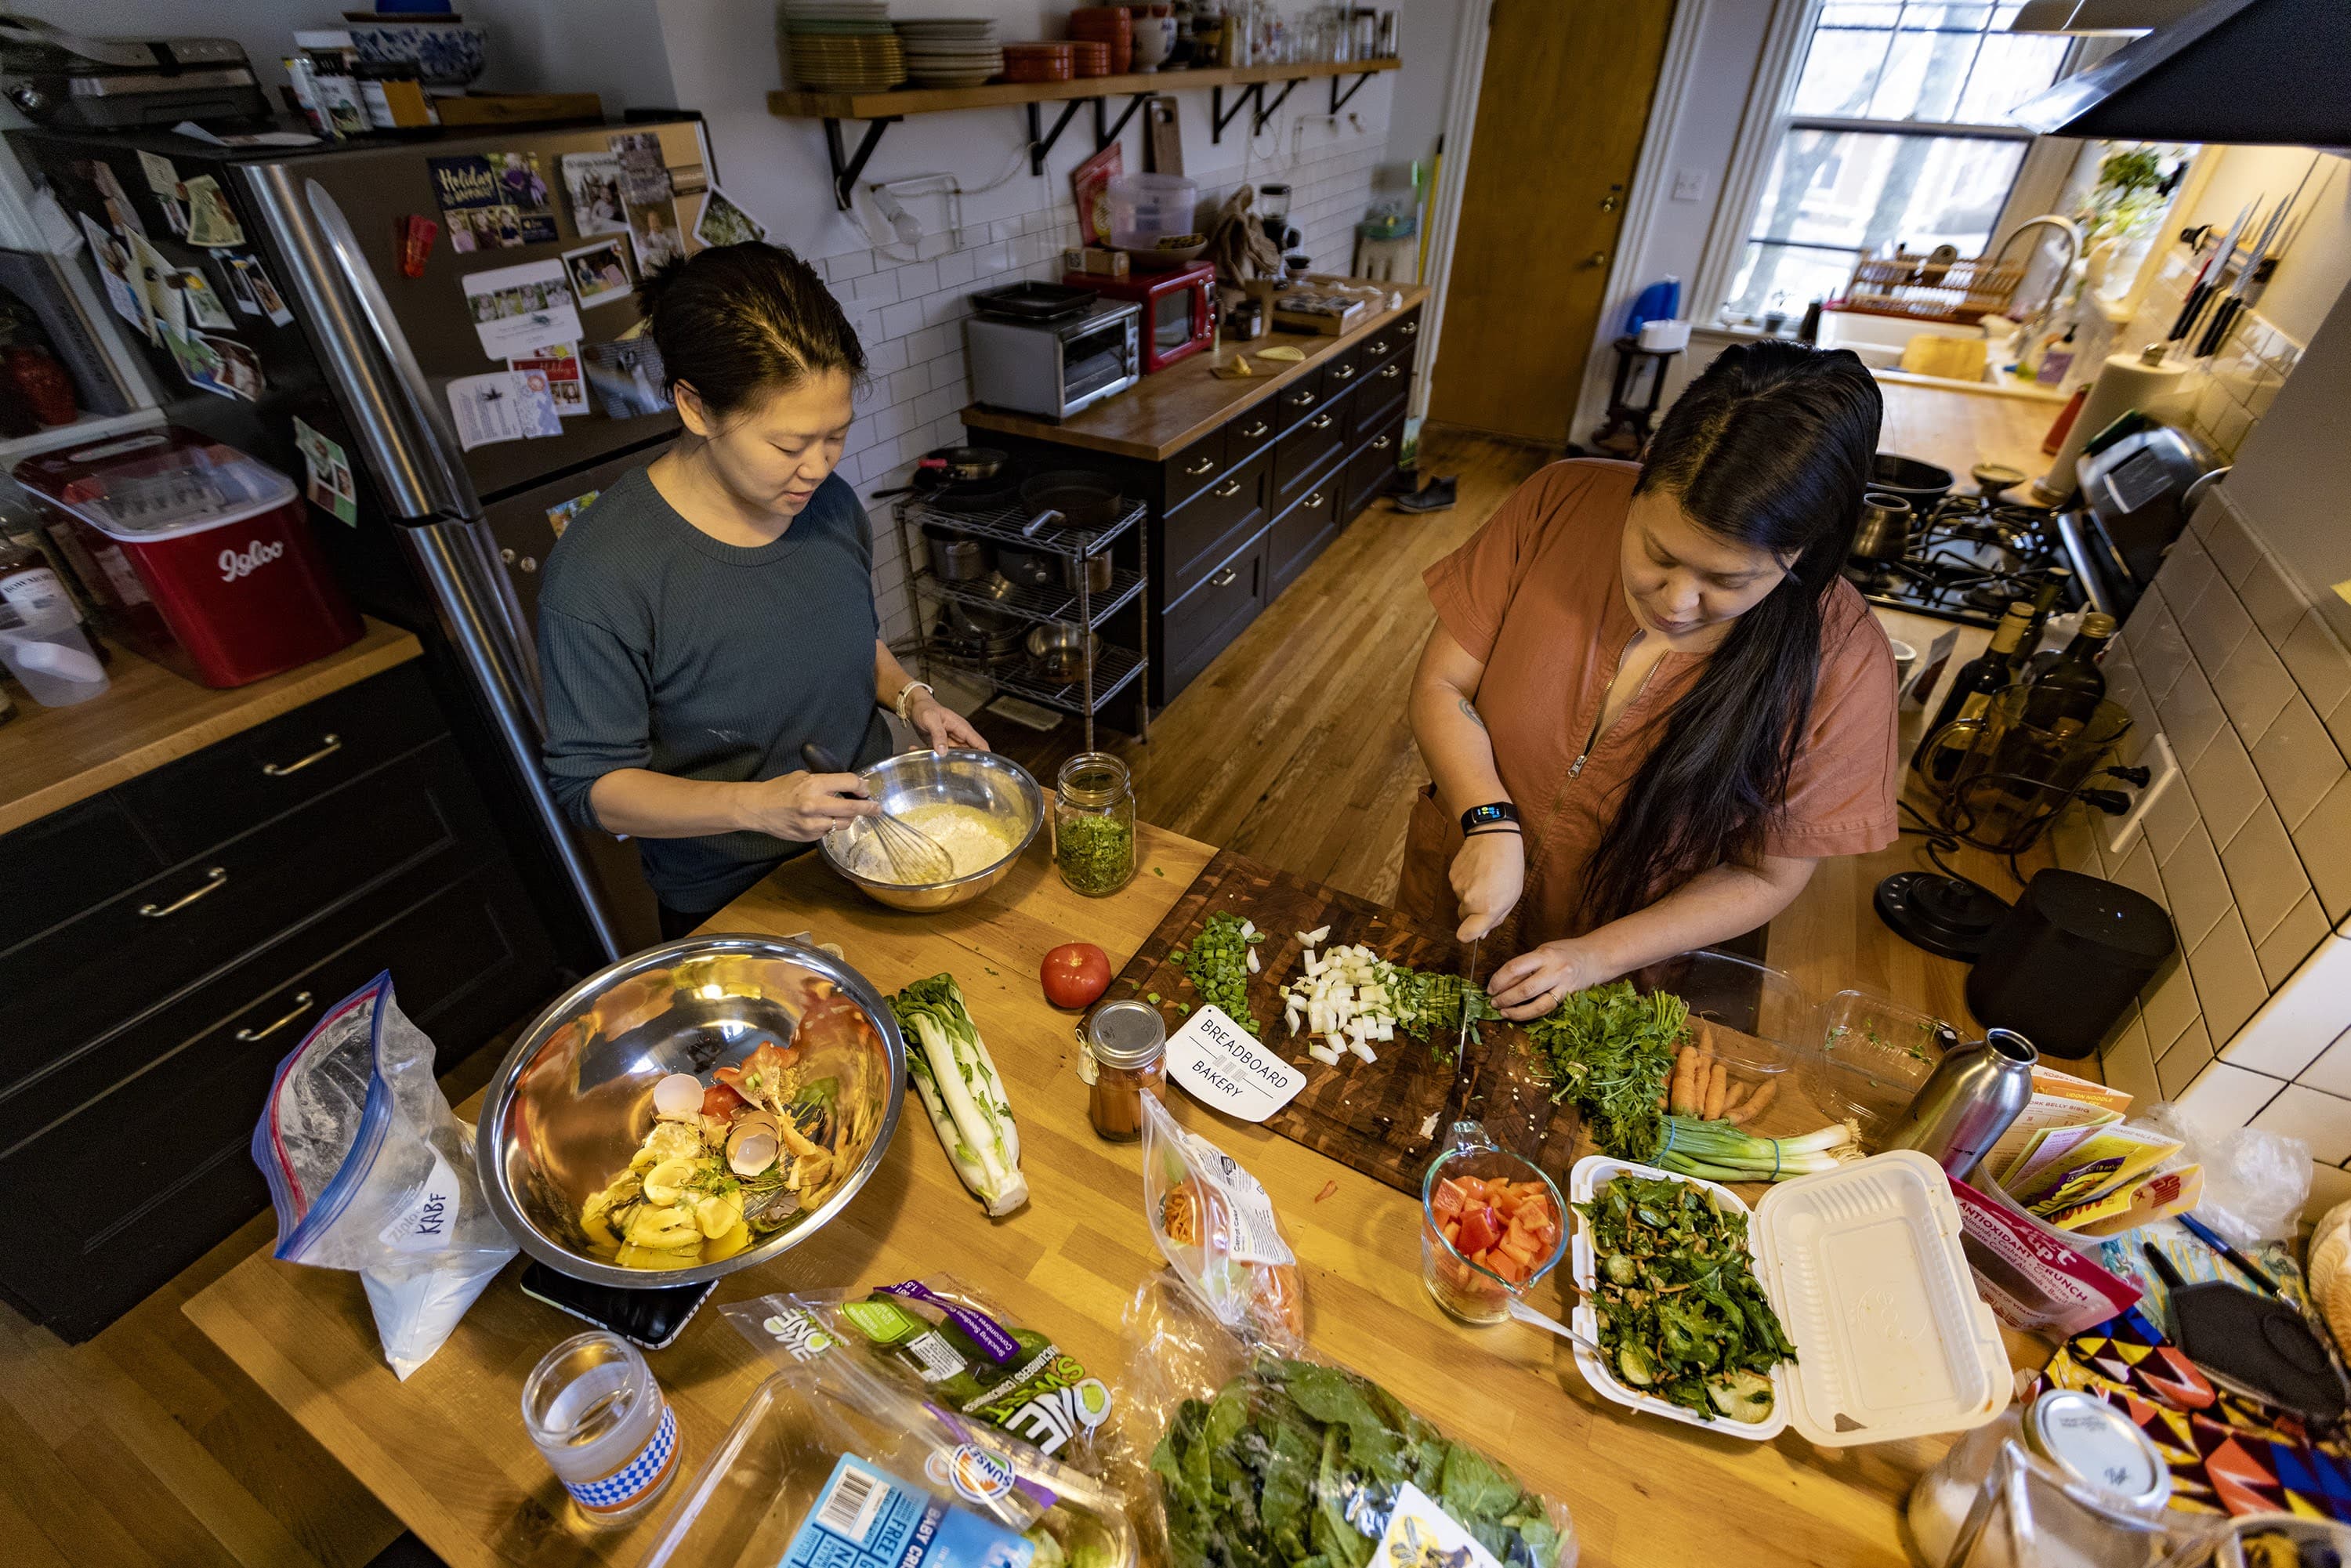 Mei Li prepares batter while Irene Li chops vegetables to make okonomiyaki, a Japanese pancake. (Jesse Costa/WBUR)